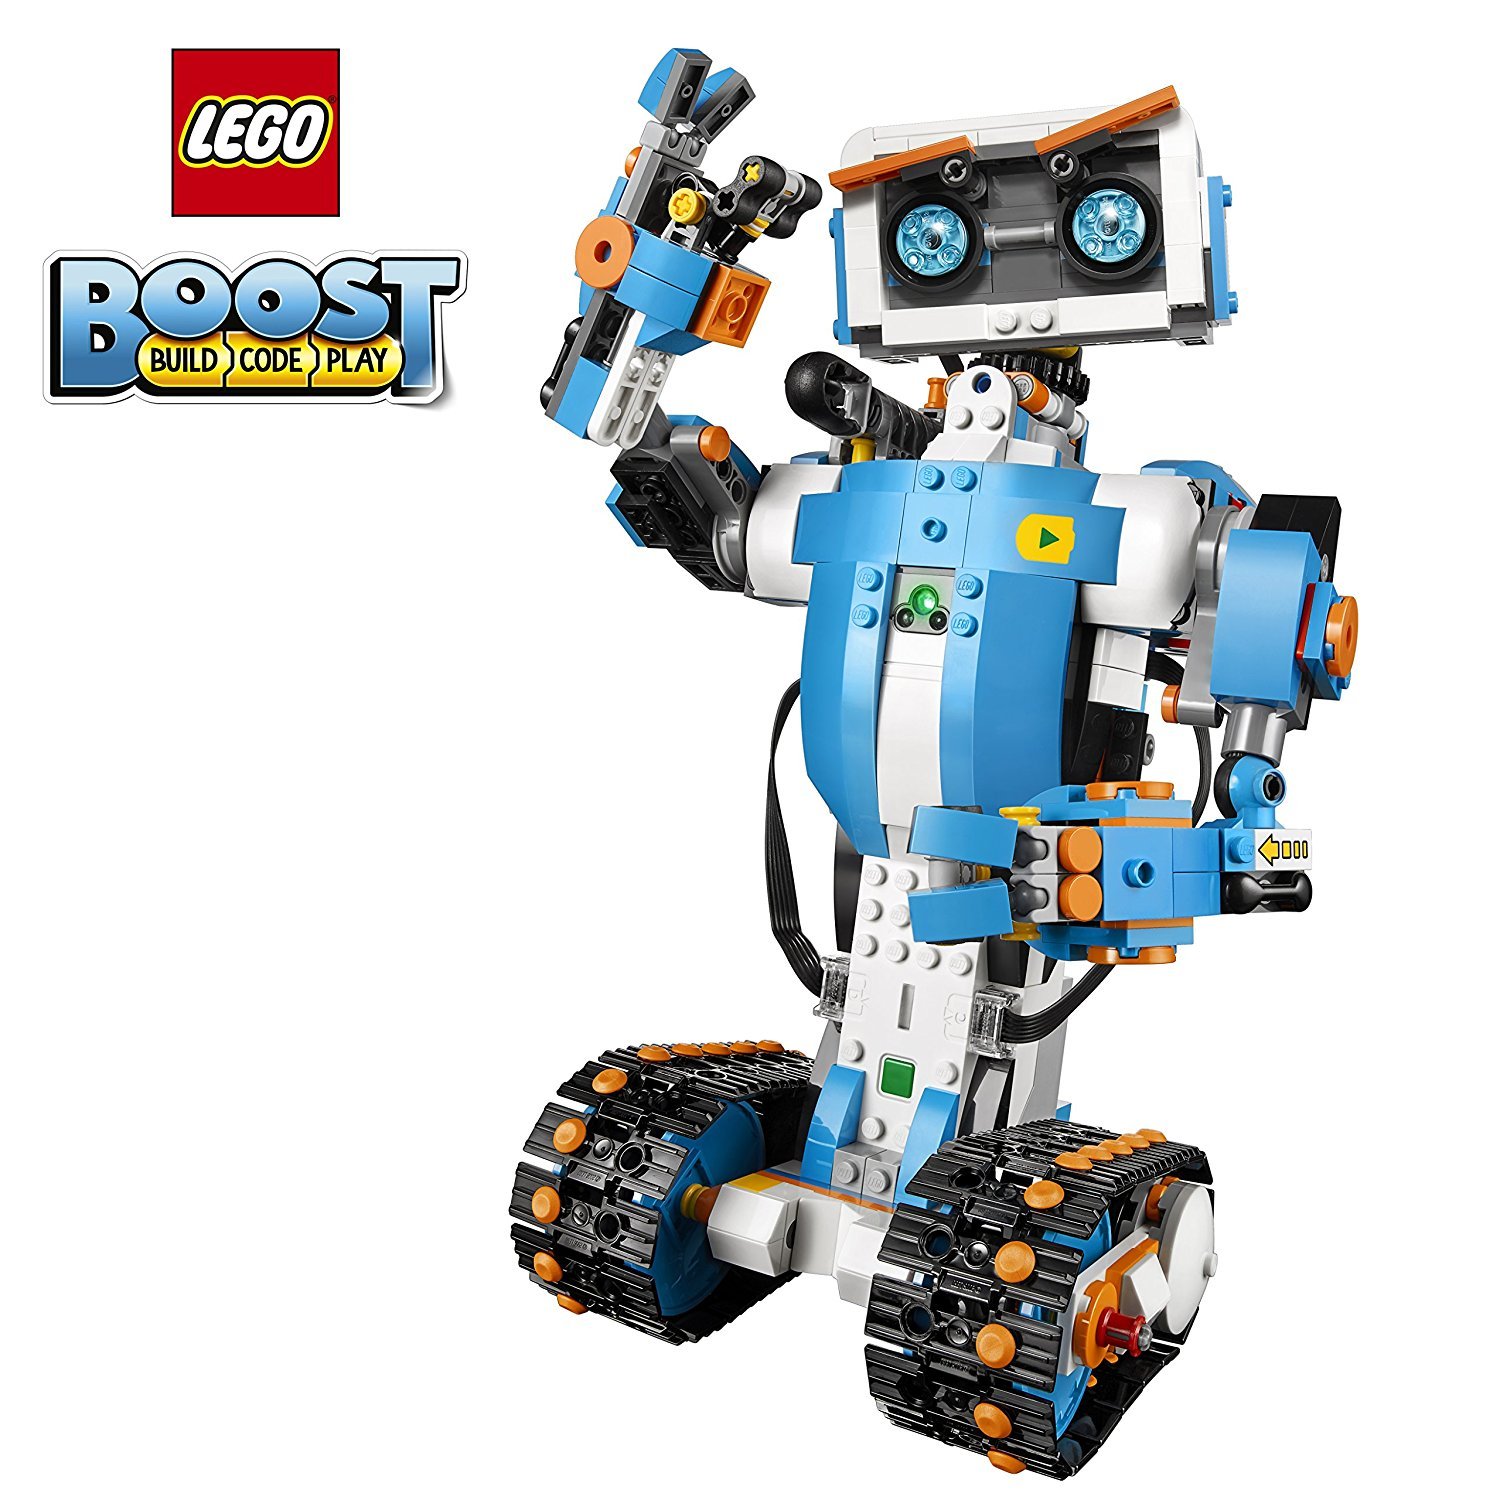 Lego Boost Creative Toolbox. Source: Lego